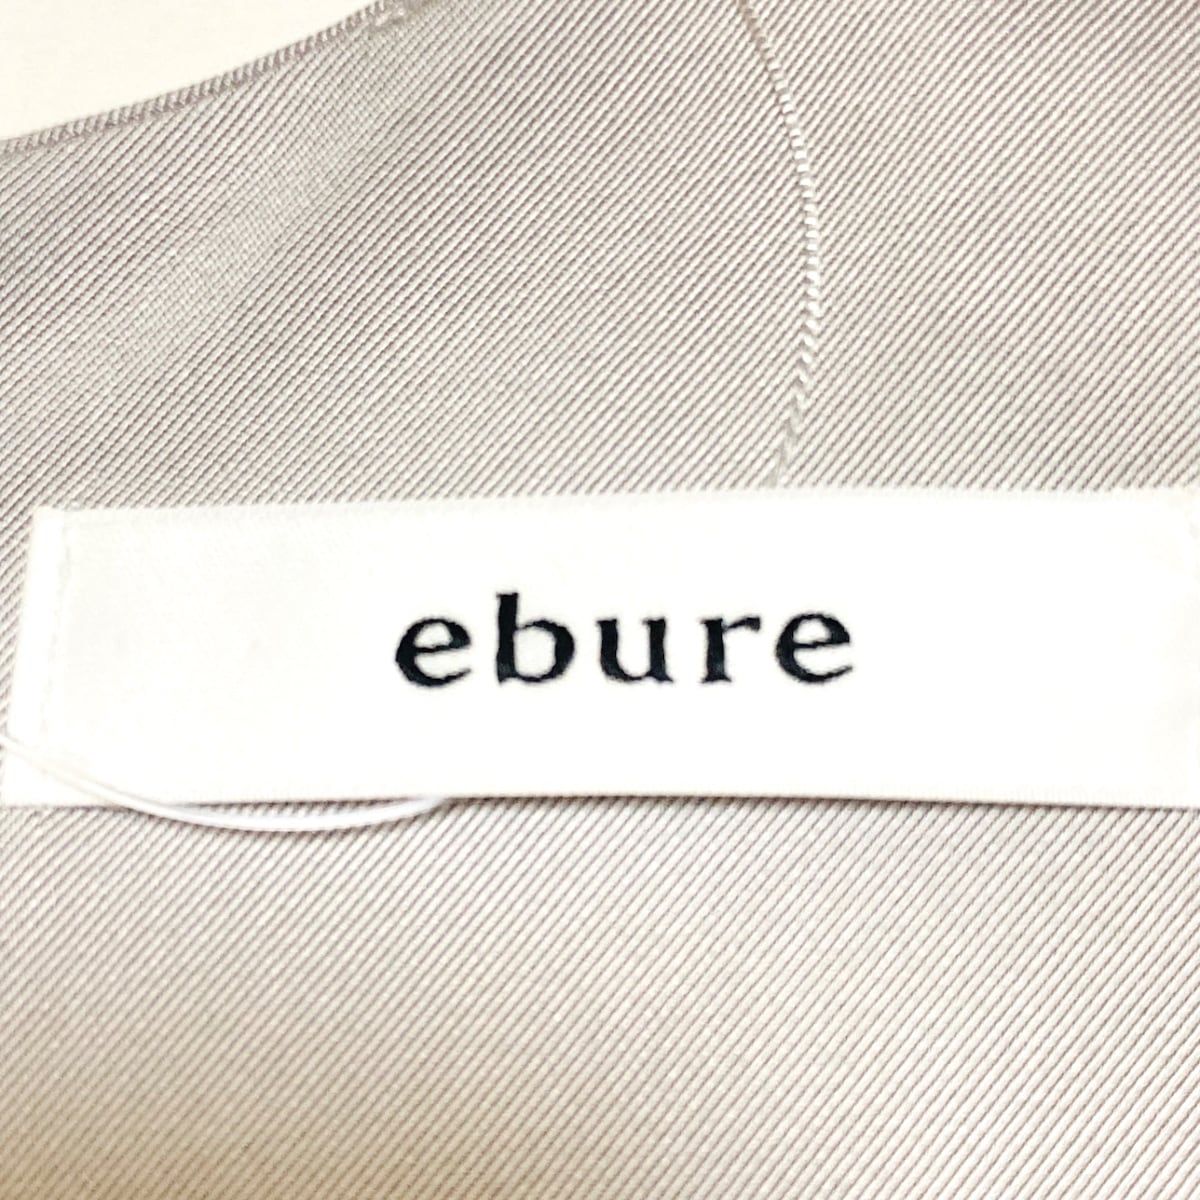 ebure(エブール) ワンピース サイズ38 M レディース - ライトグレー Vネック/ノースリーブ/マキシ丈